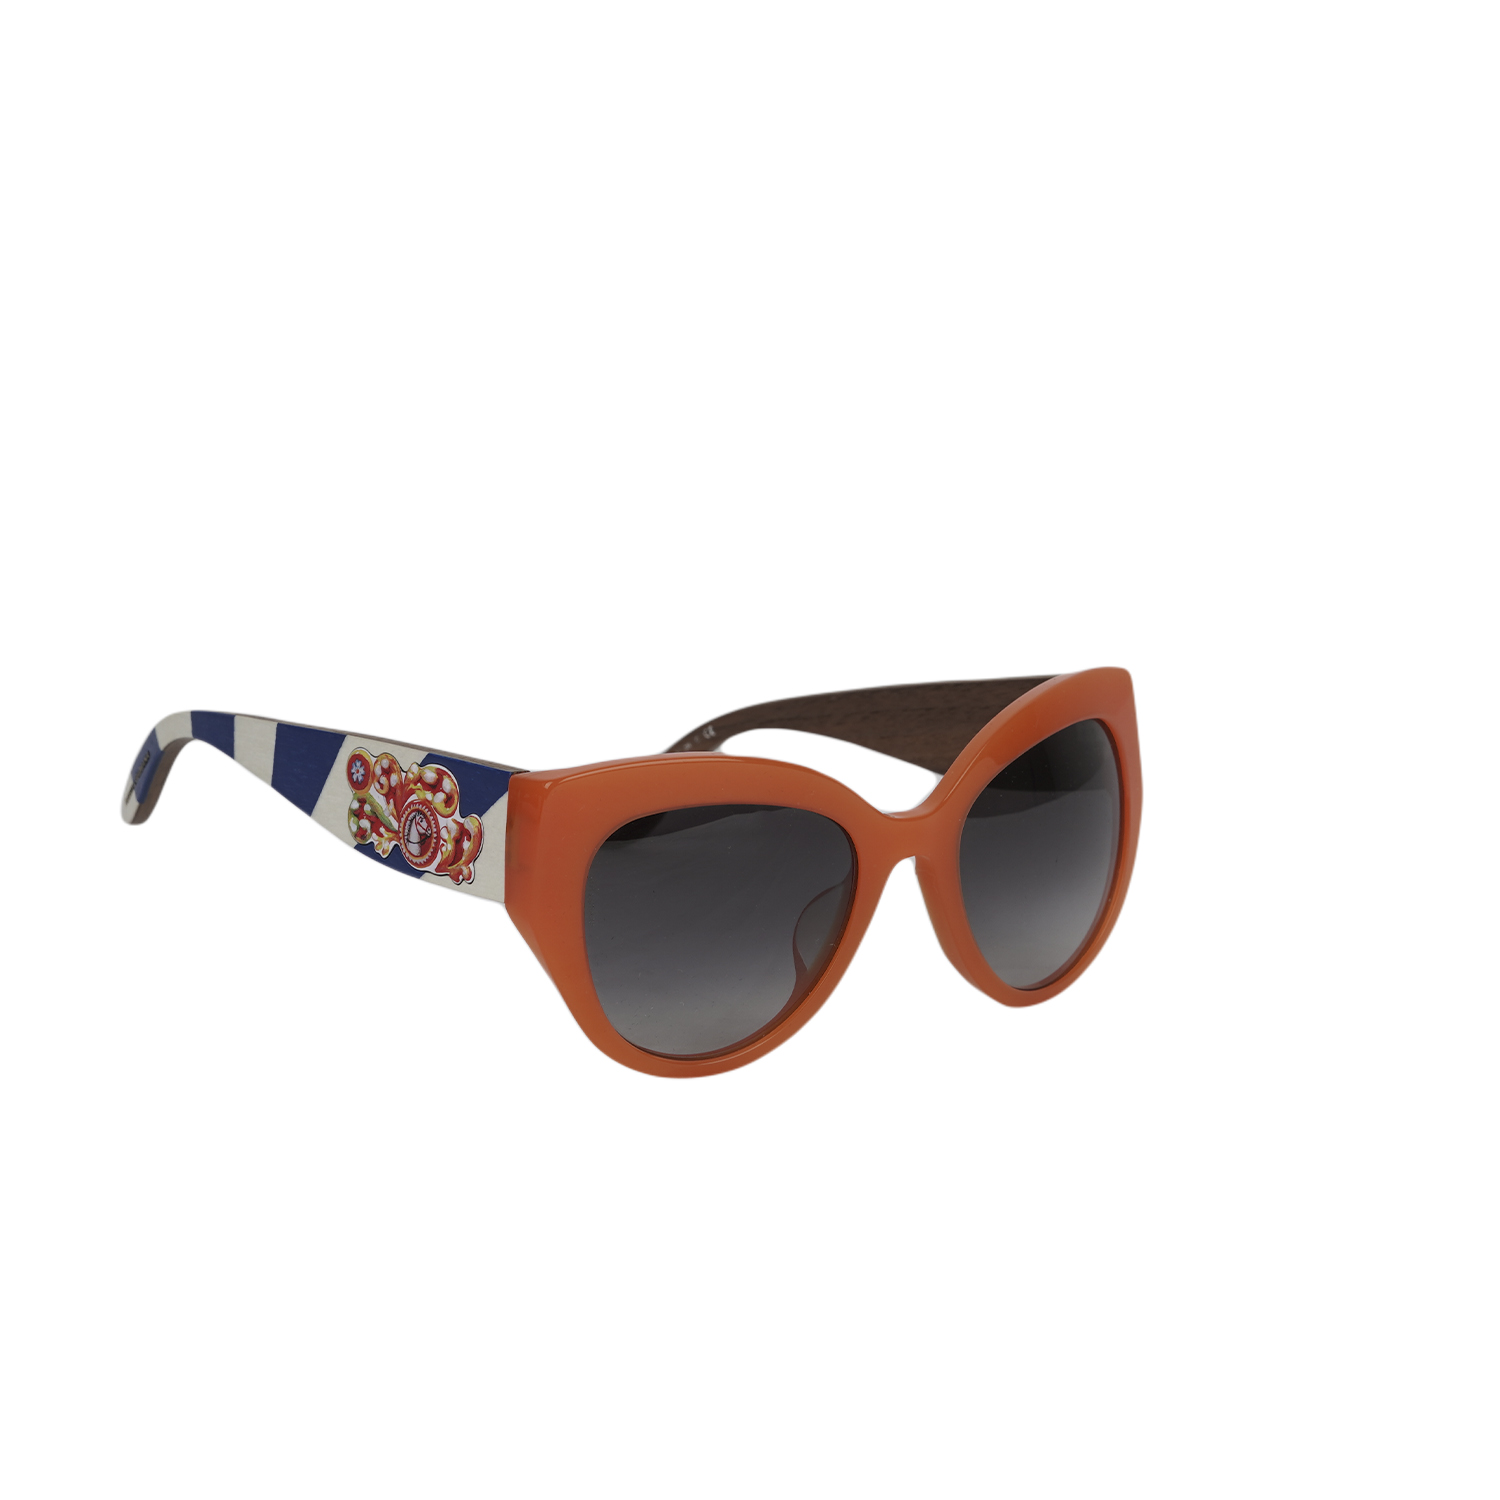 Printed Frame Sunglasses